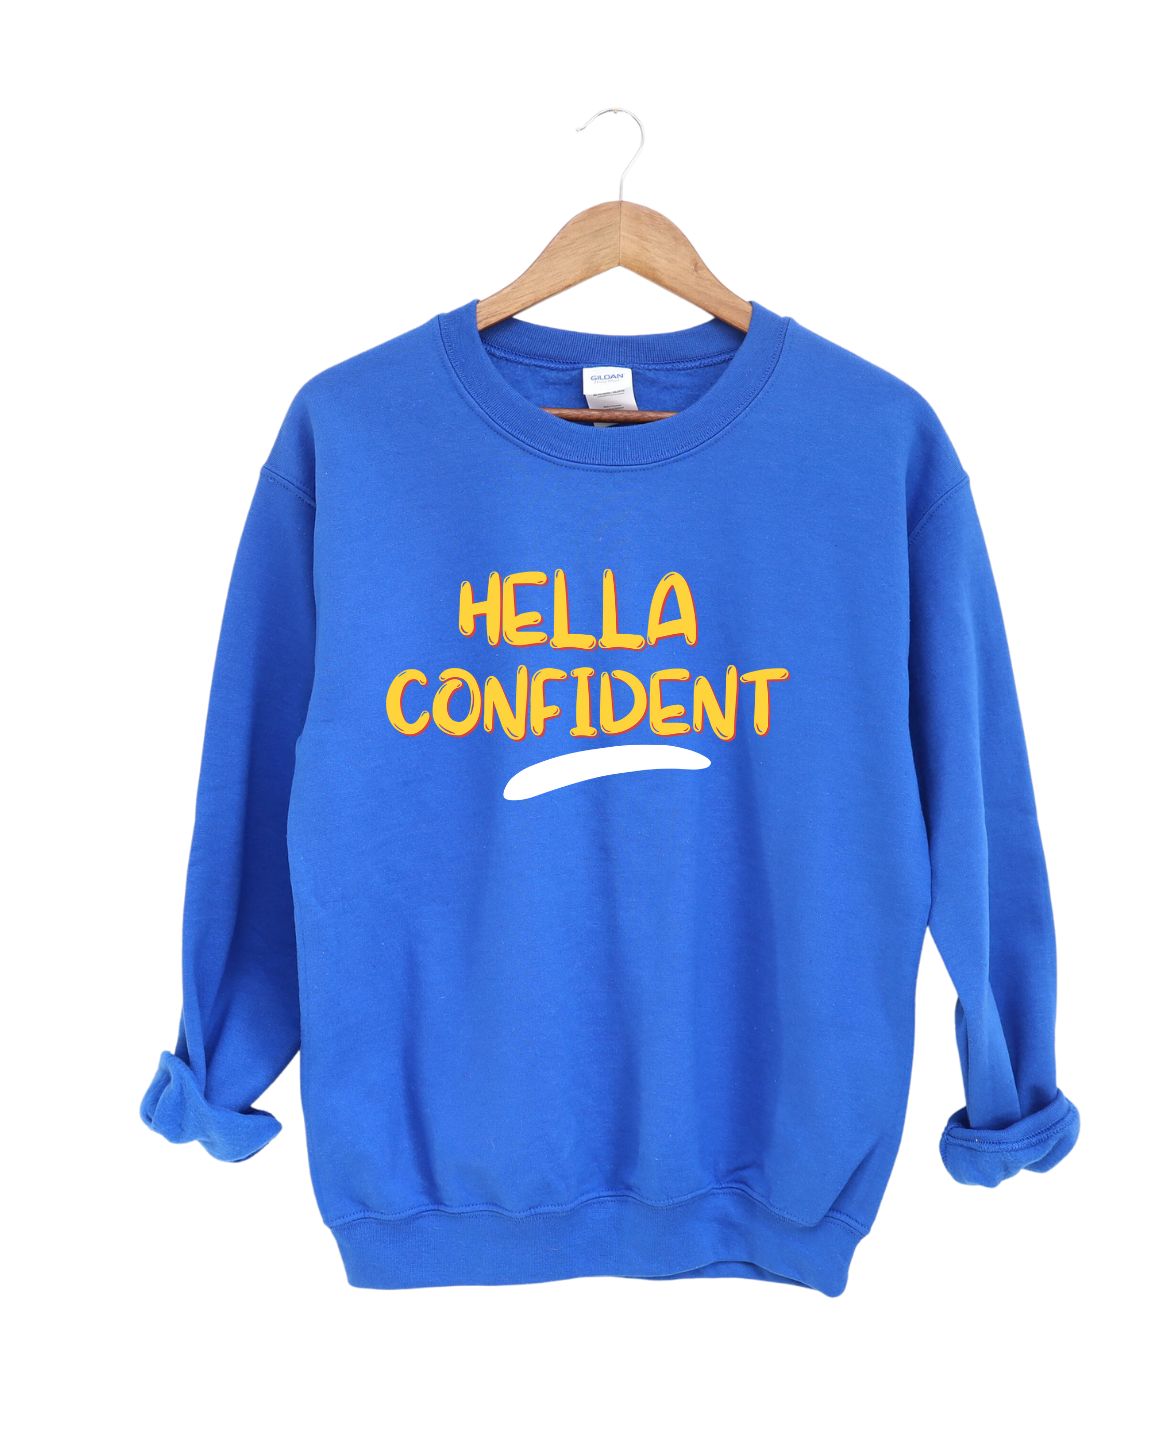 Hella Confident -Sweatshirt